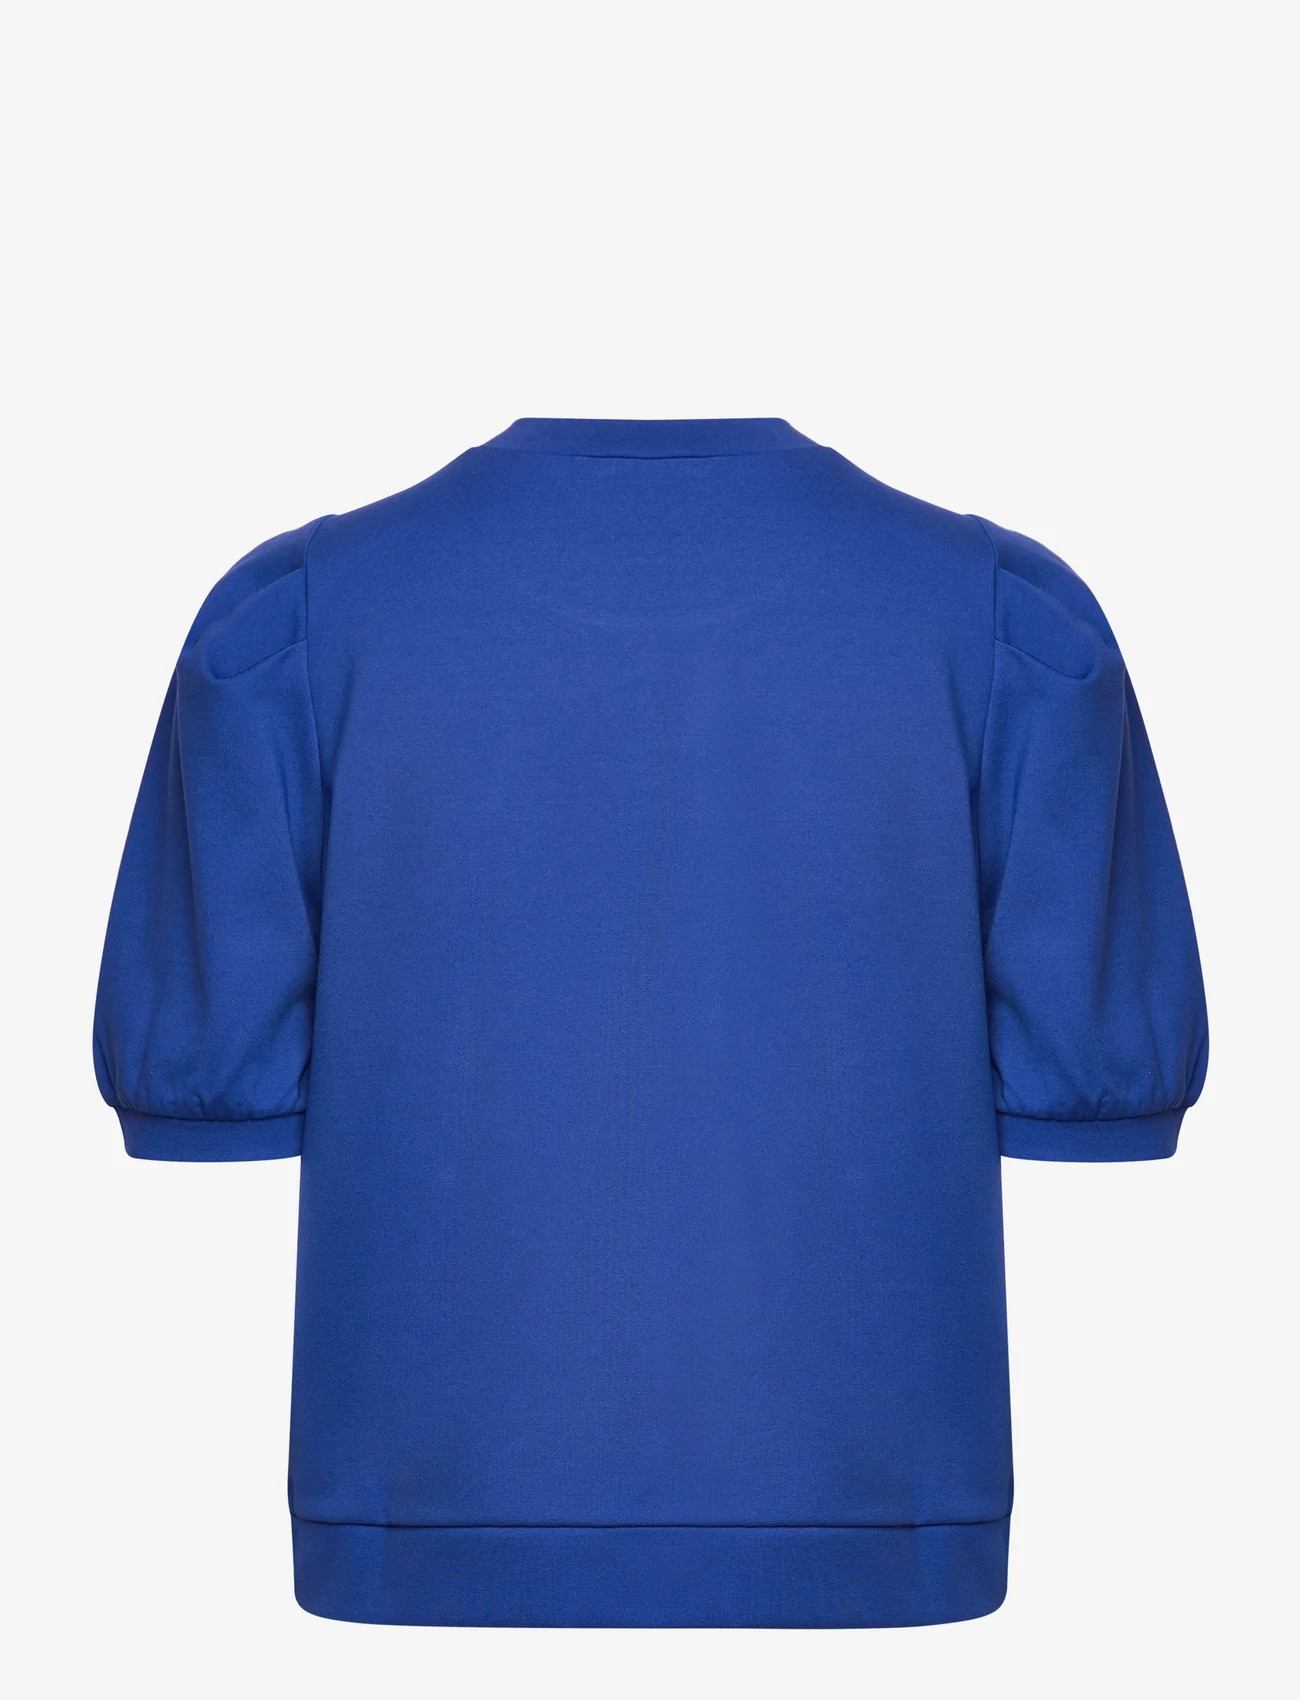 Coster Copenhagen - Sweat shirt with pleats - t-shirts - electric ocean - 1